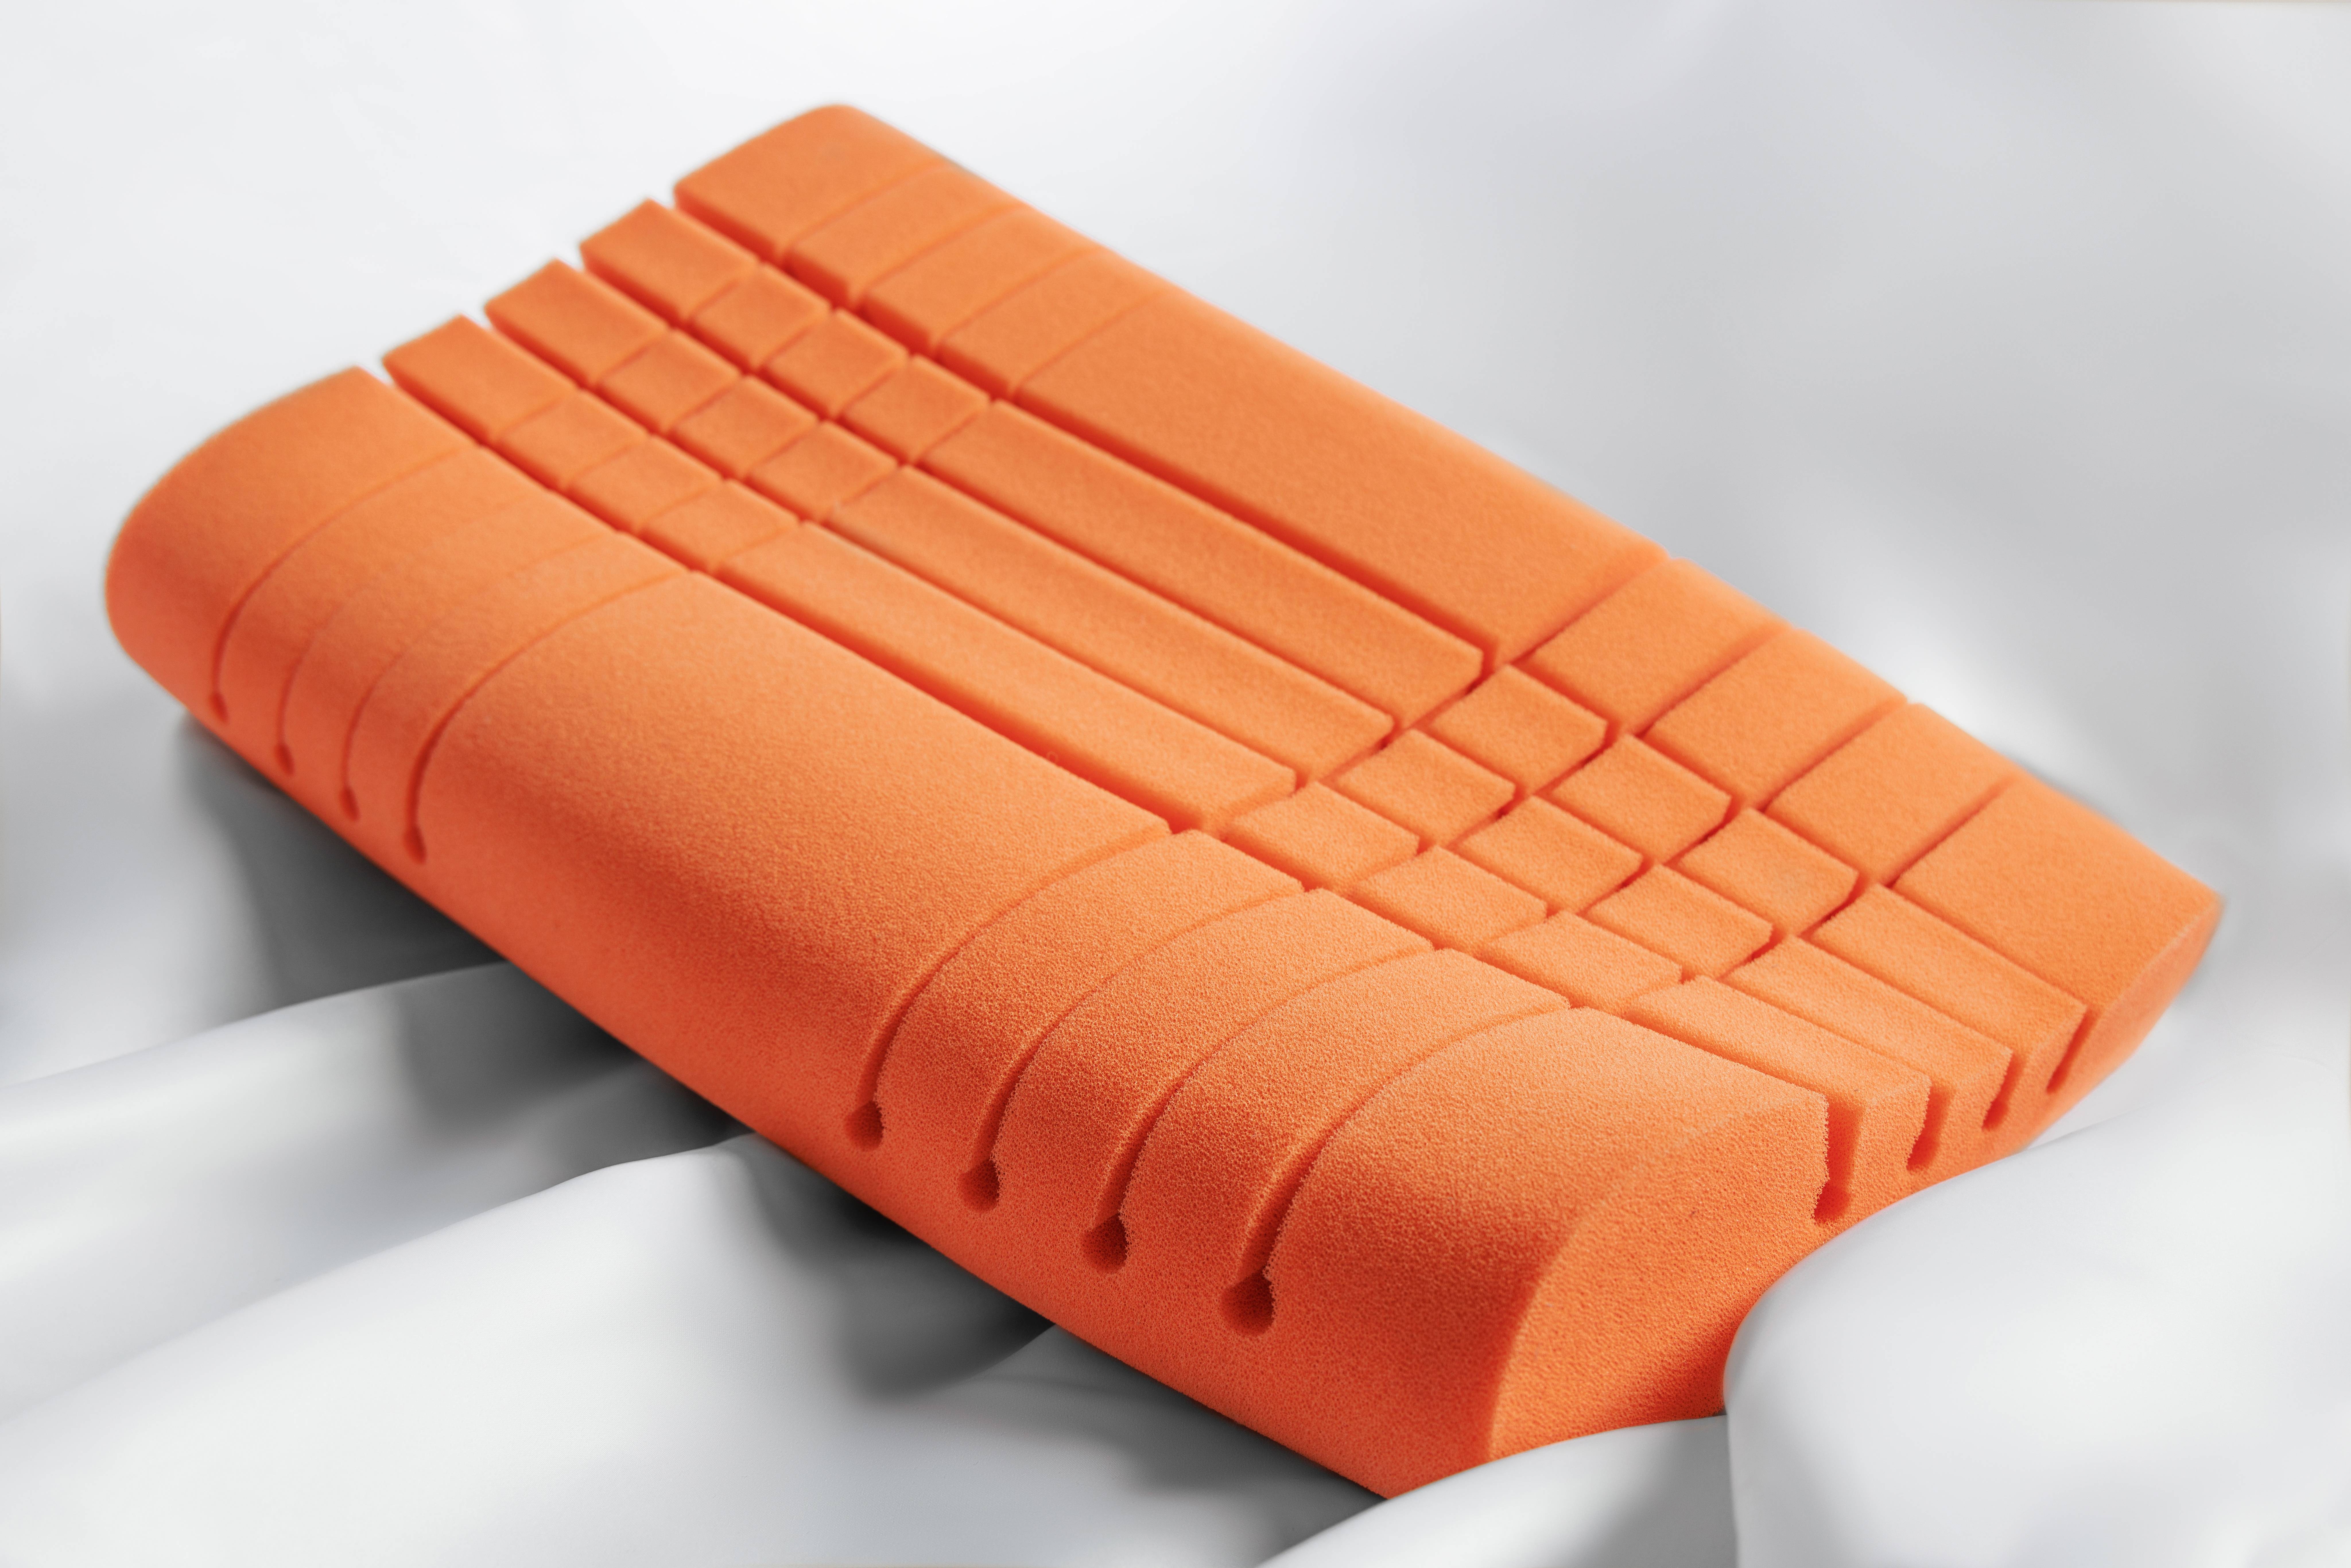 French Design Awards - Washable silicone genki pillow